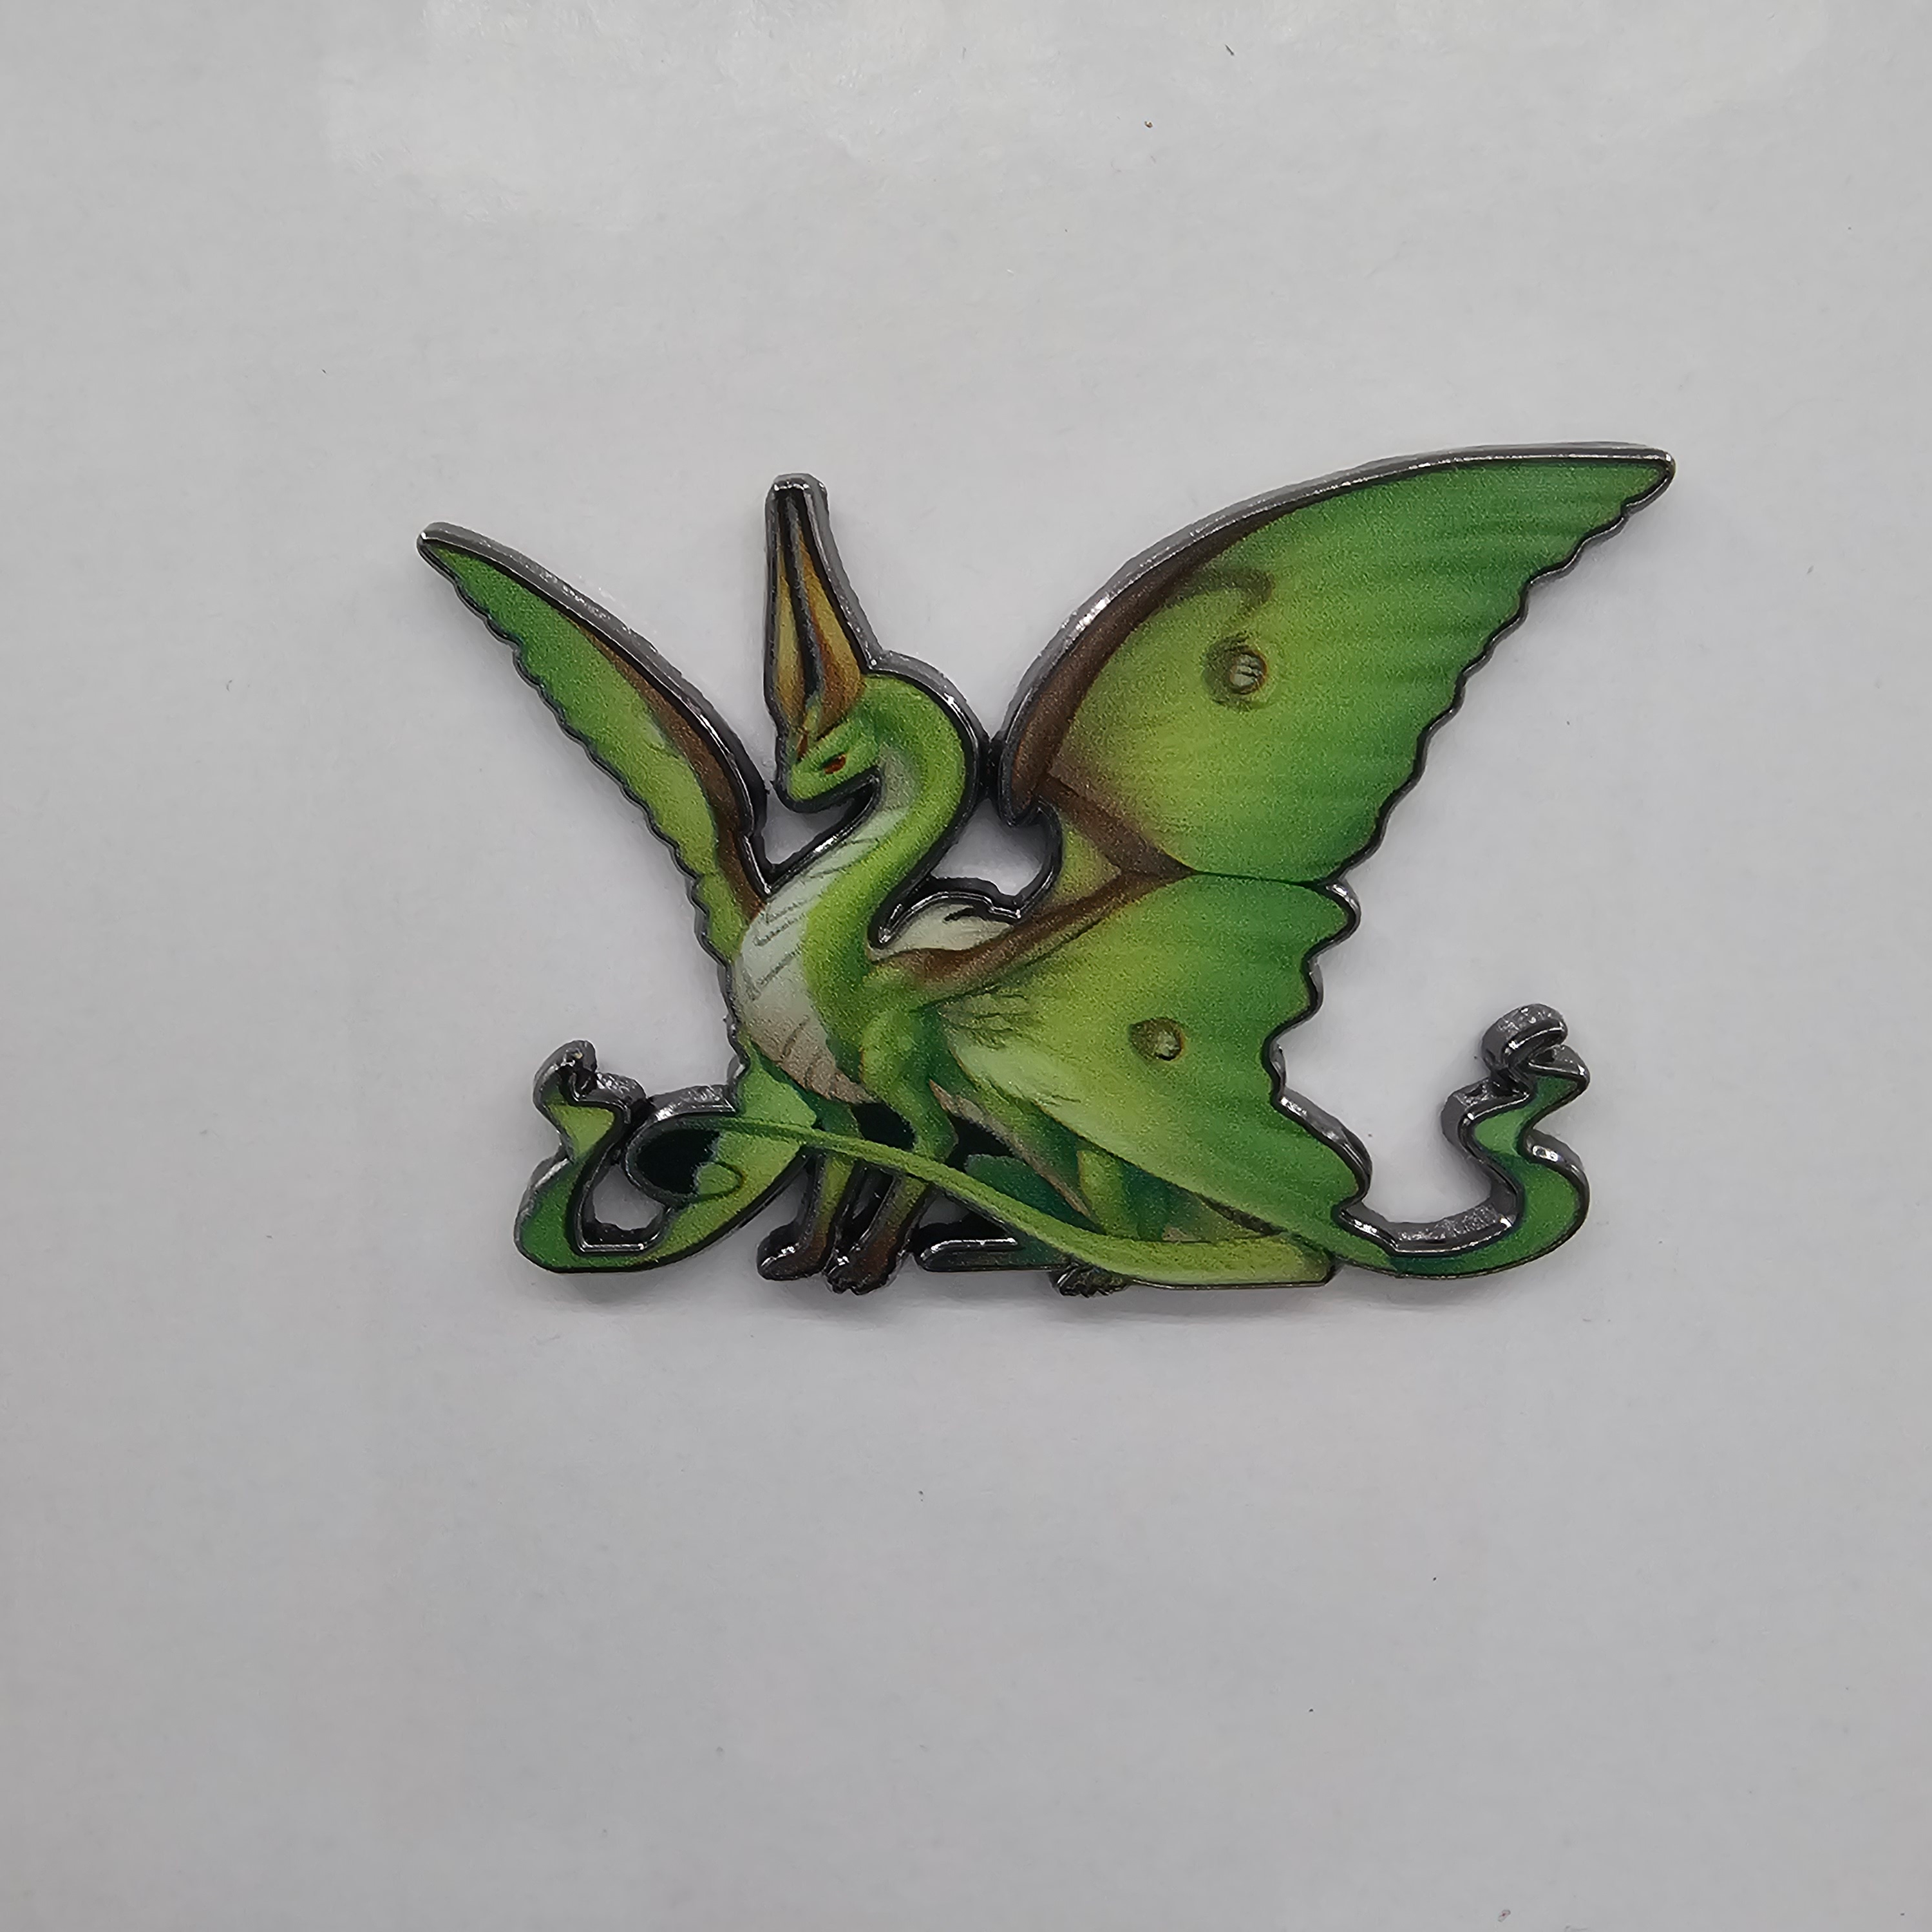 Luna Fairy Dragon Pin